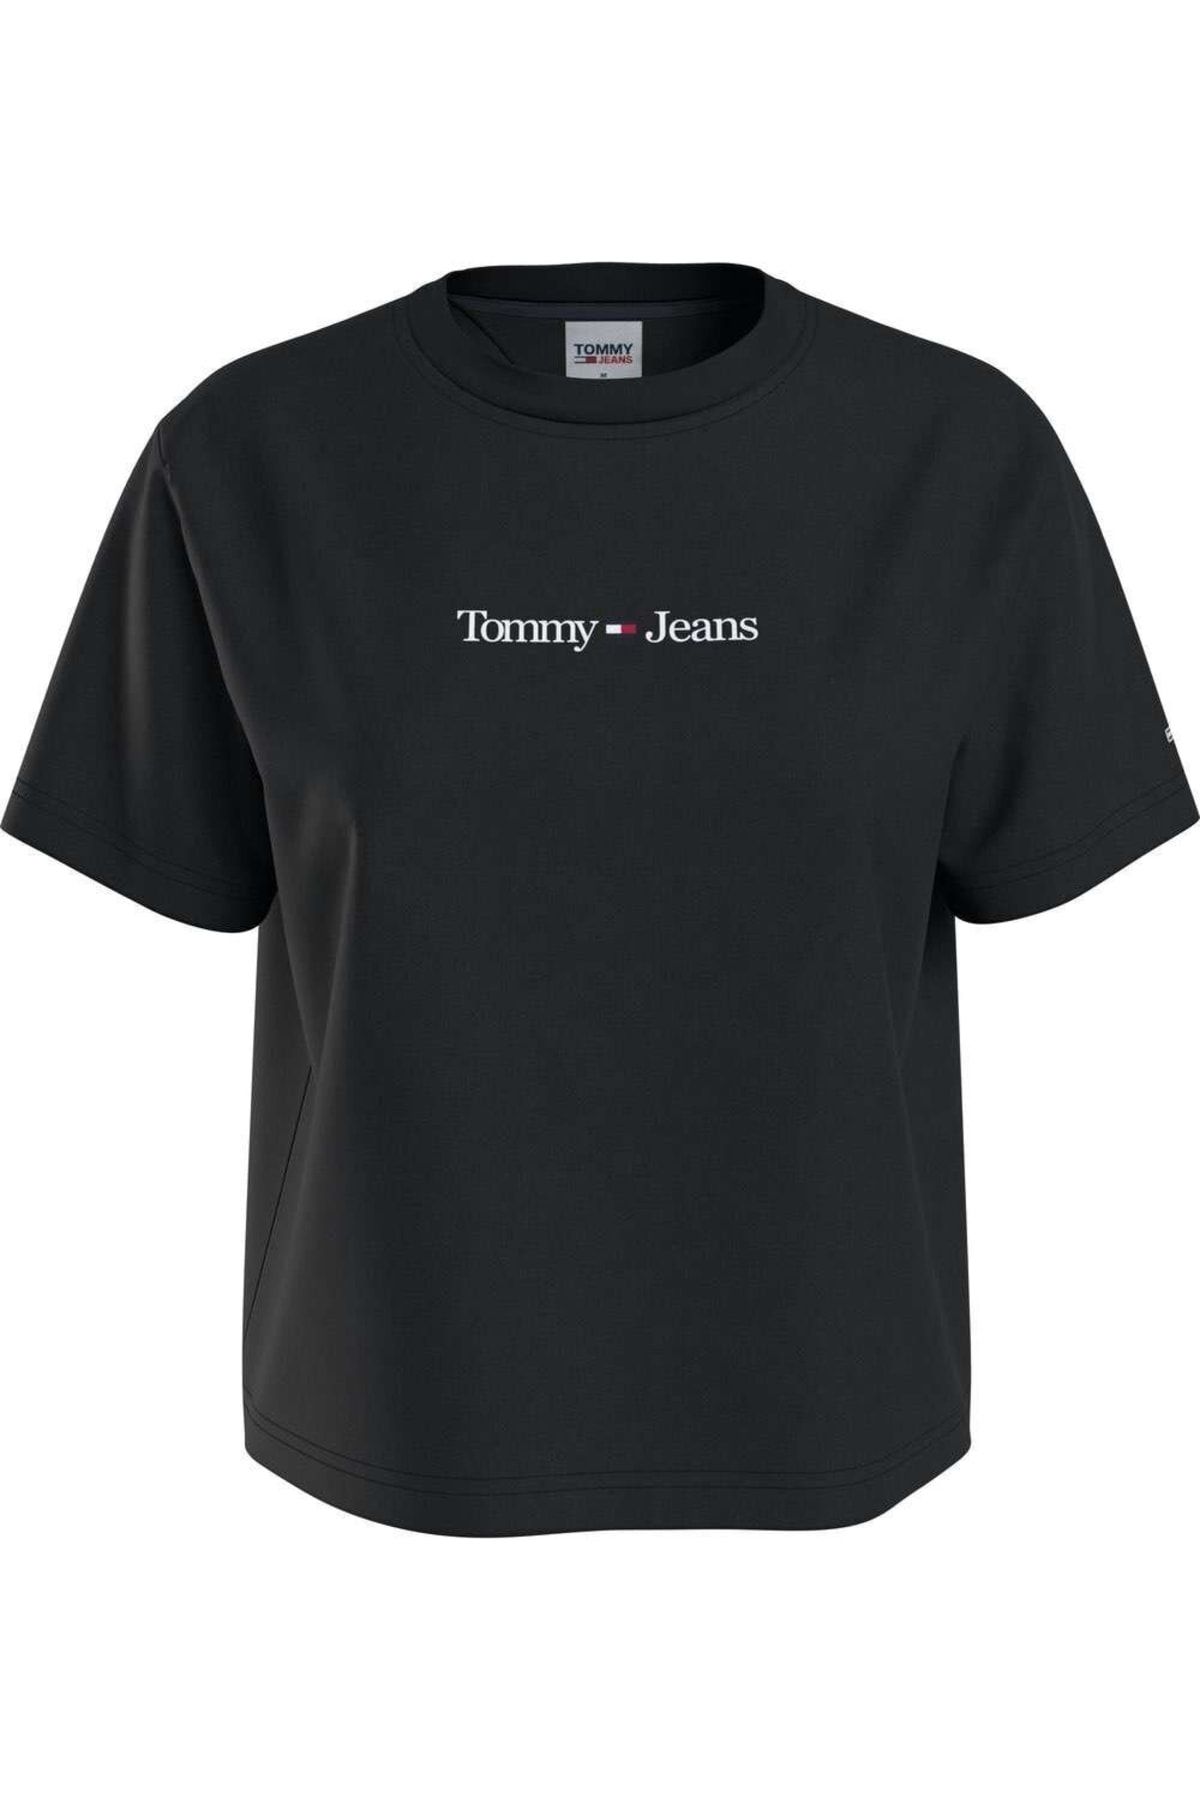 Cls Hilfiger Serif Tommy Trendyol - Damen T-Shirt Linear Tommy Jeans